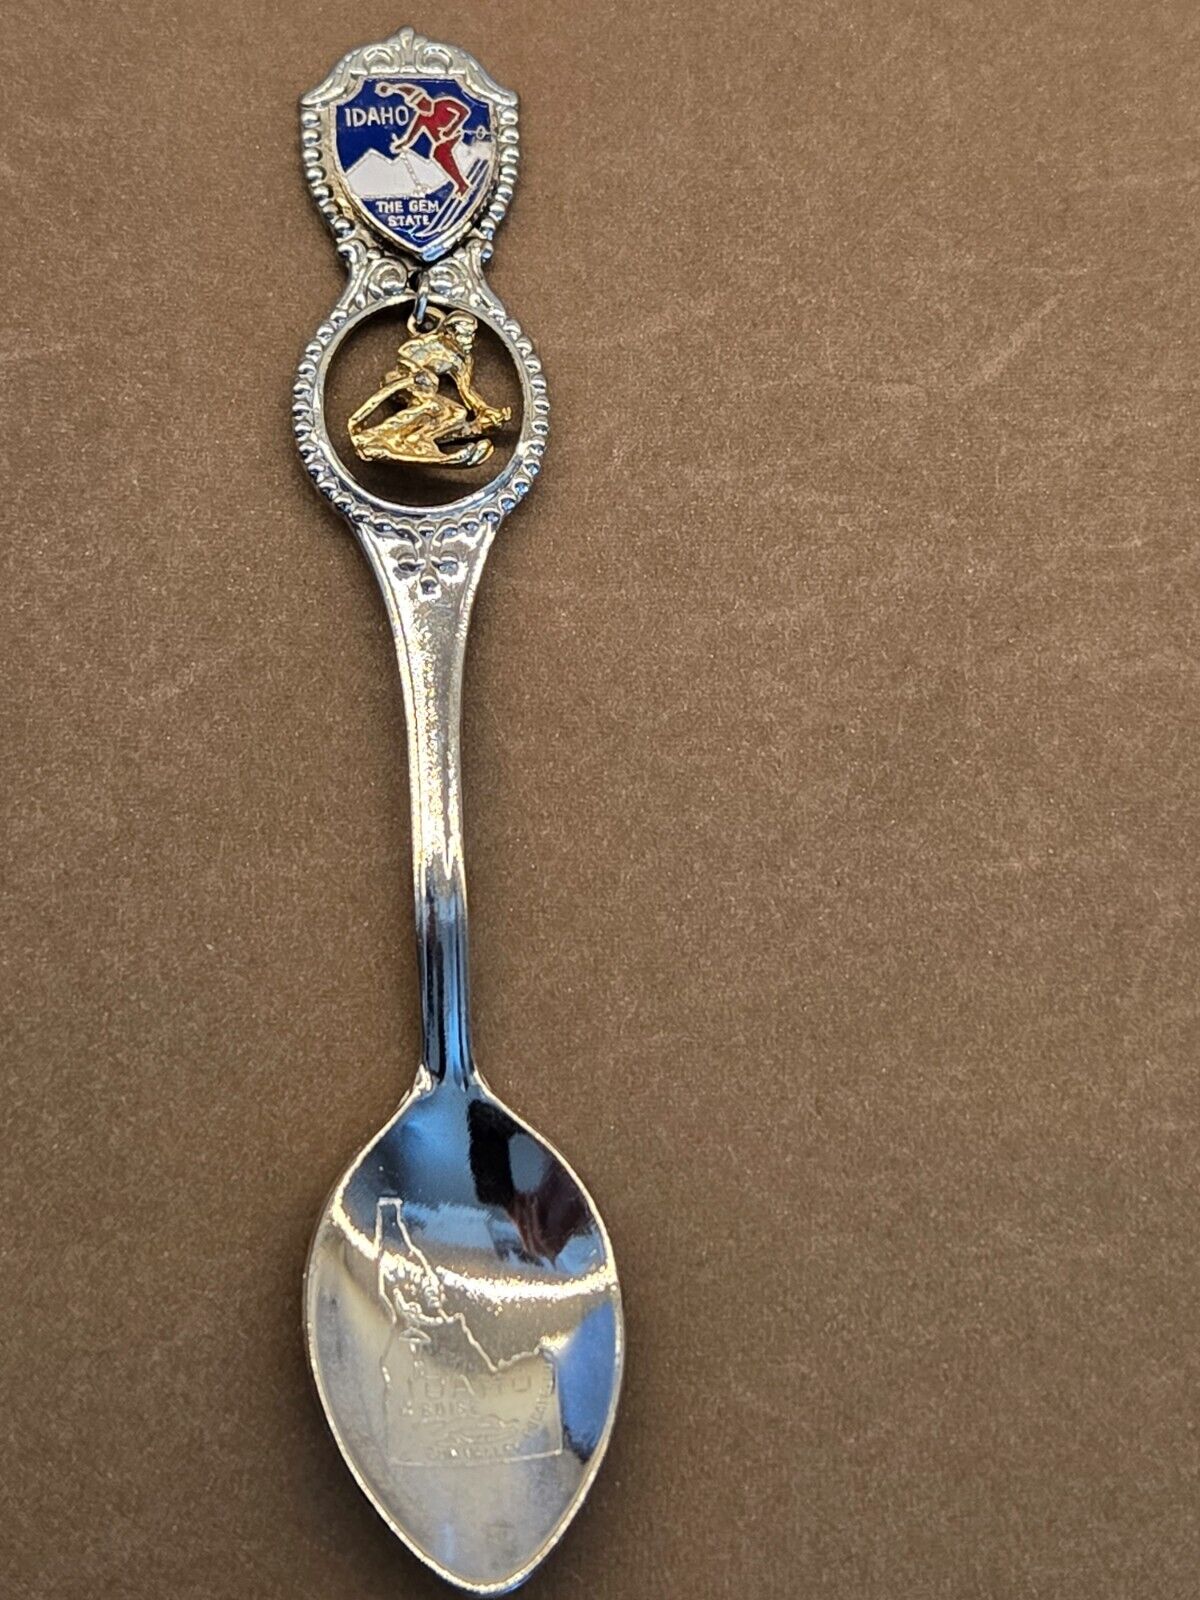 Idaho Vintage Souvenir Spoon US Collectible with Skier Charm  4.5\